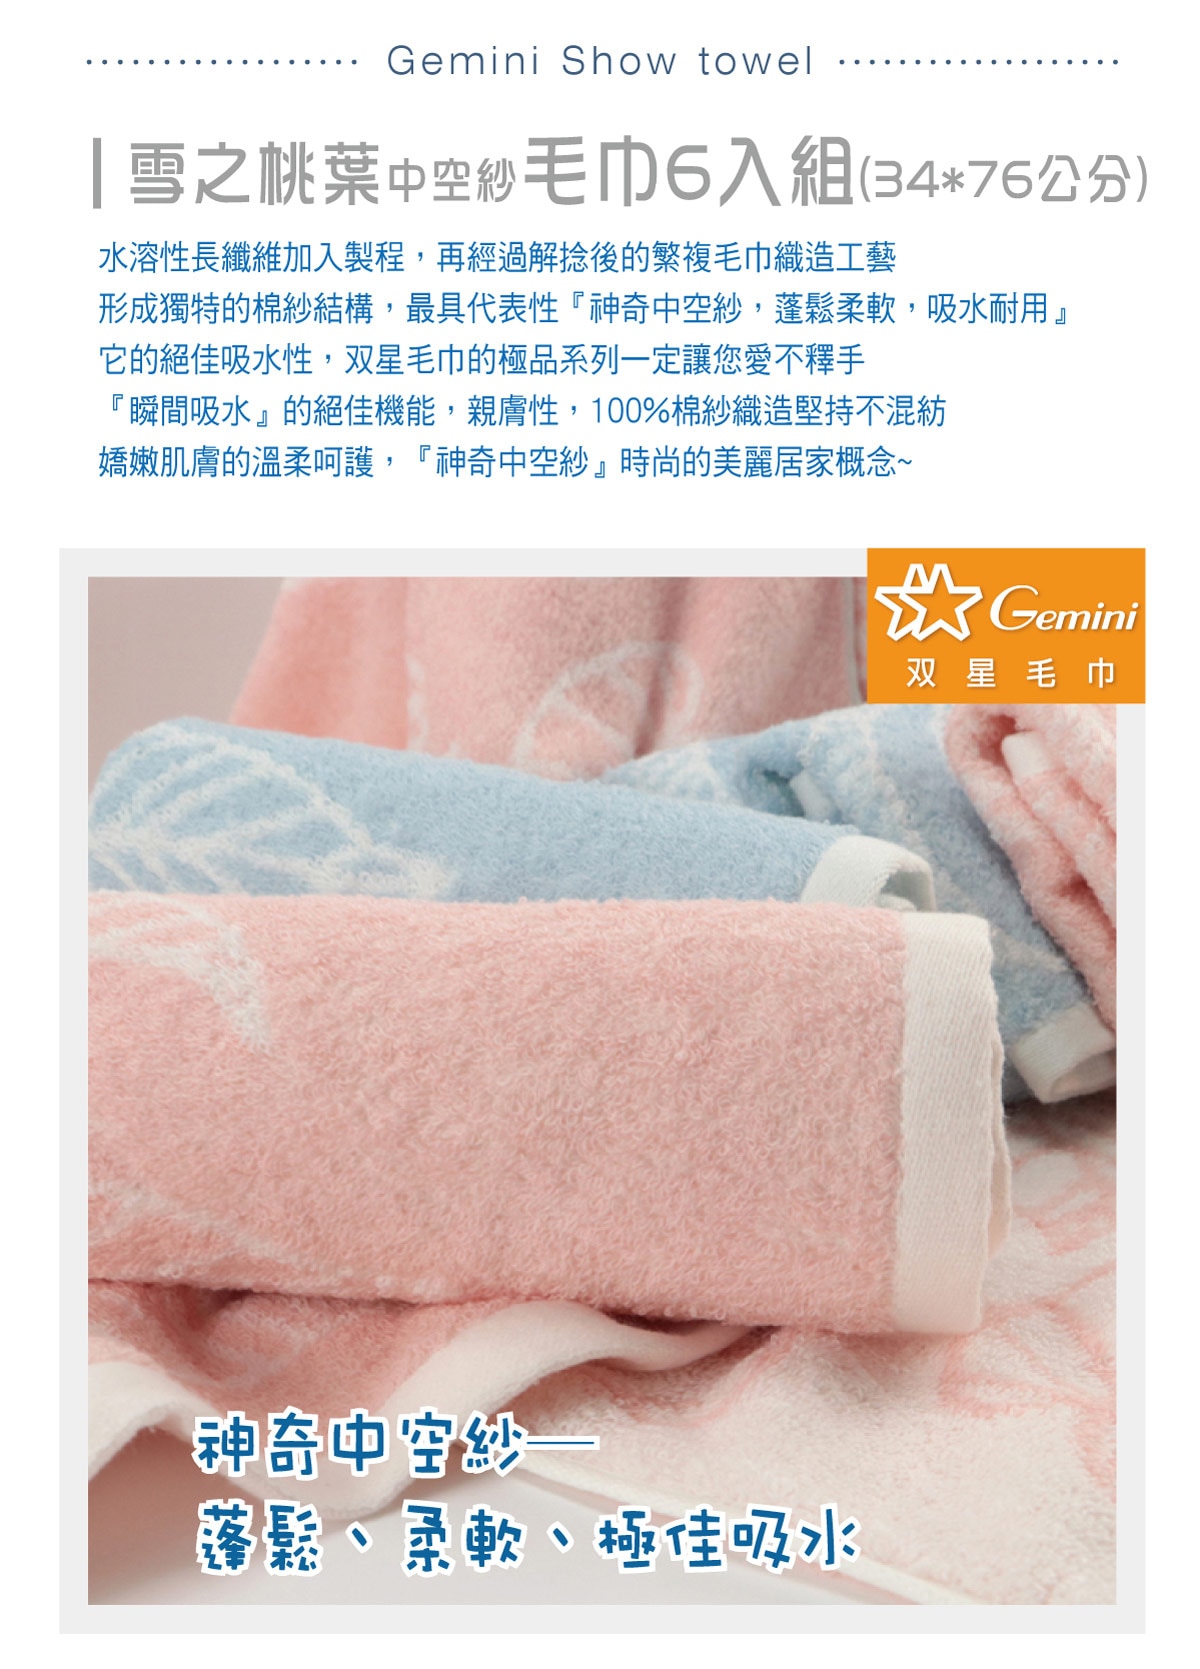 Gemini雙星毛巾中空紗浴巾蓬鬆柔軟,吸水耐用為純棉紗。